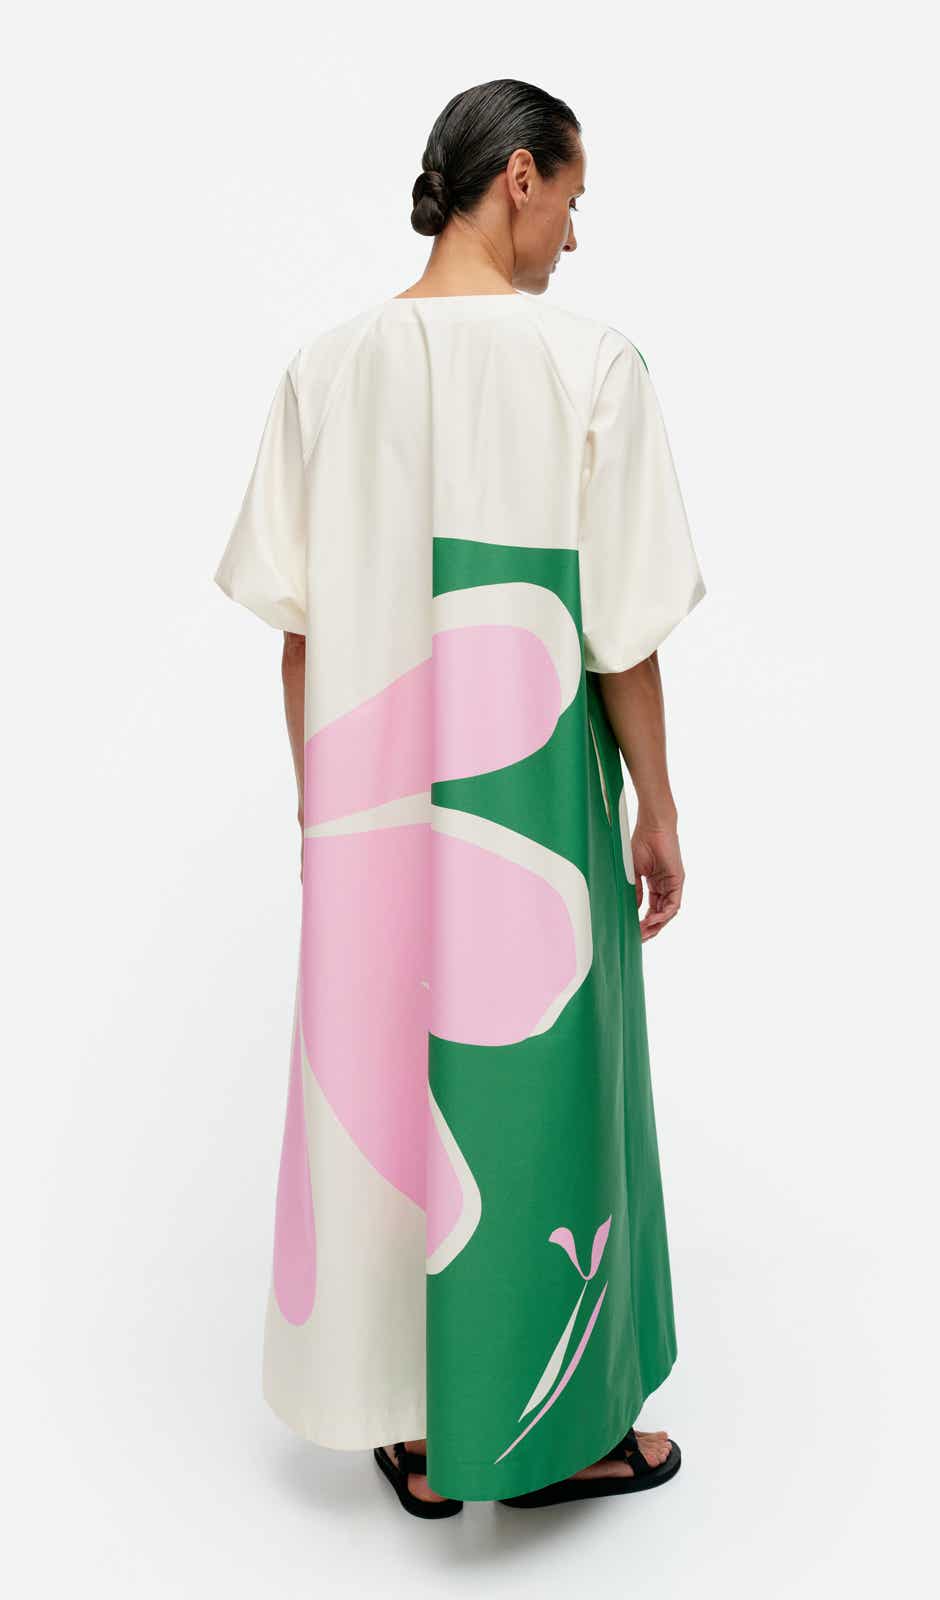 Karkelo Kolmikko dress – organic cotton twill